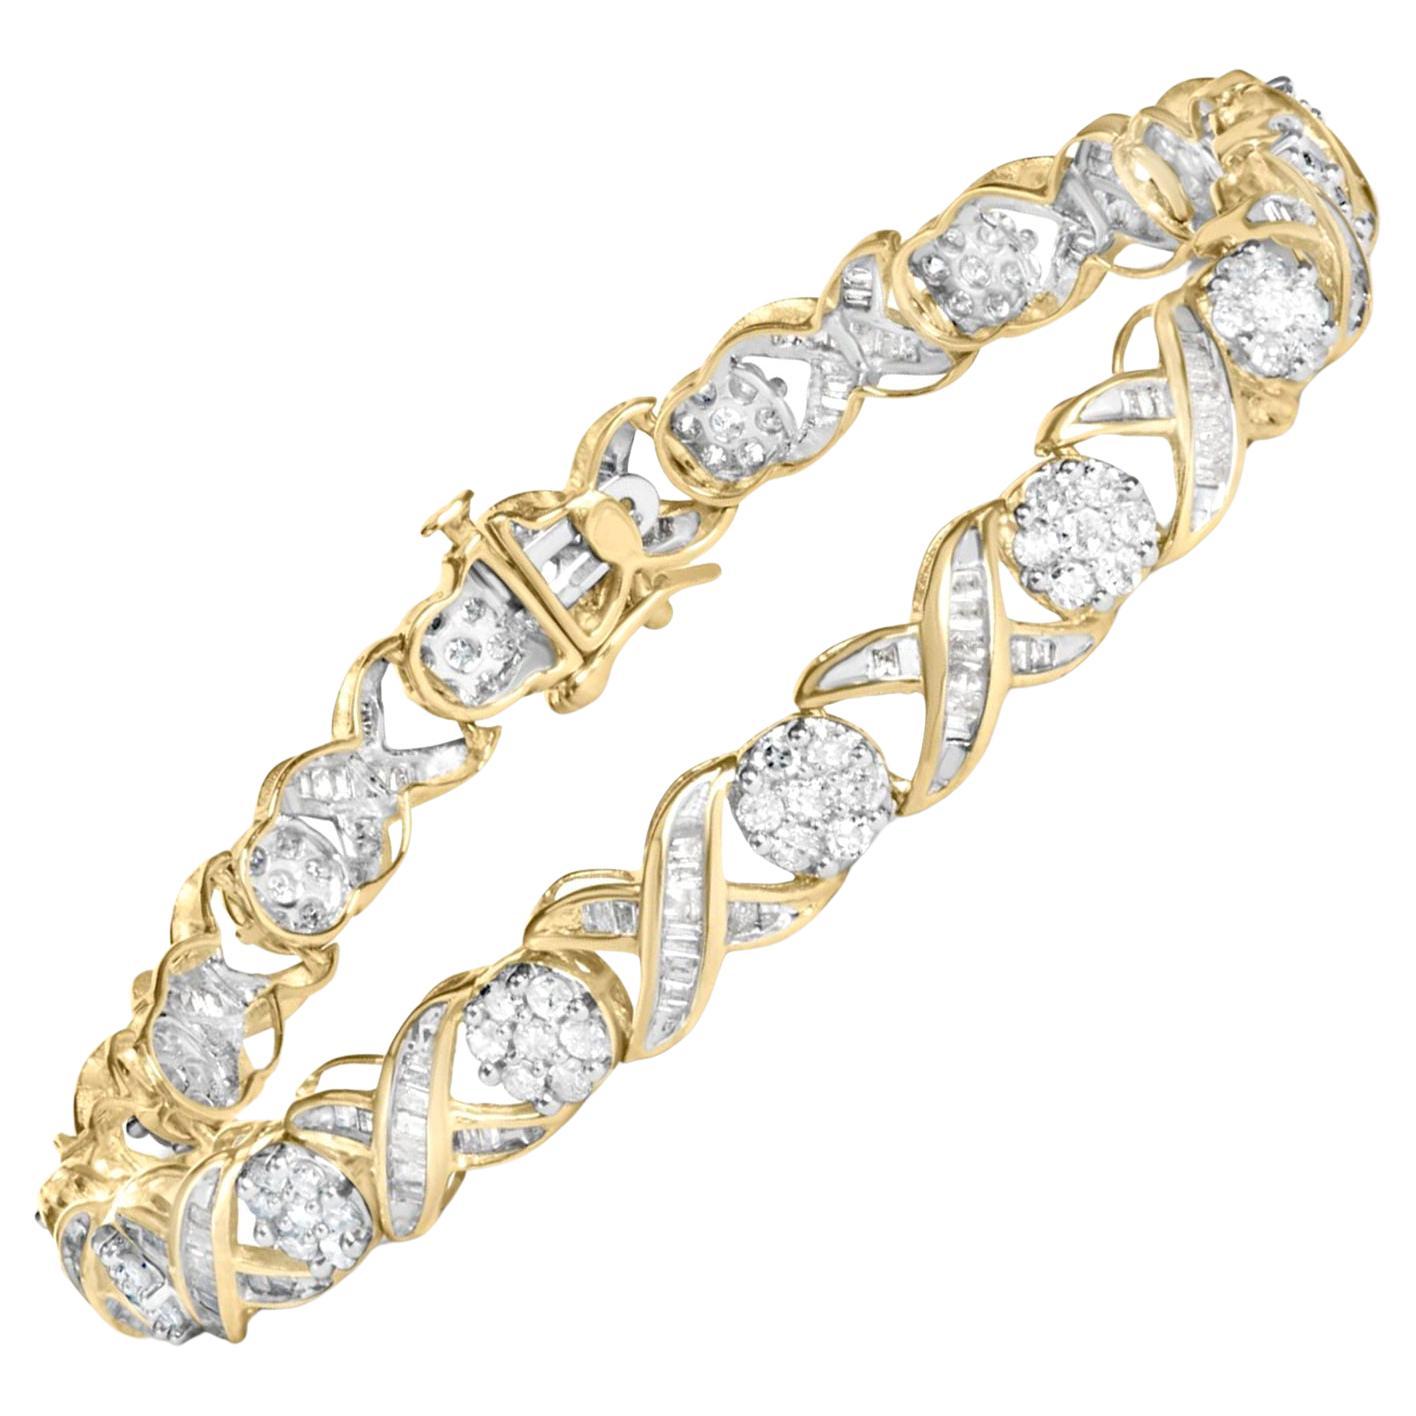 XOXO Diamond Link Bracelet Round and Baguette Cut 3 Carats 10K Yellow Gold